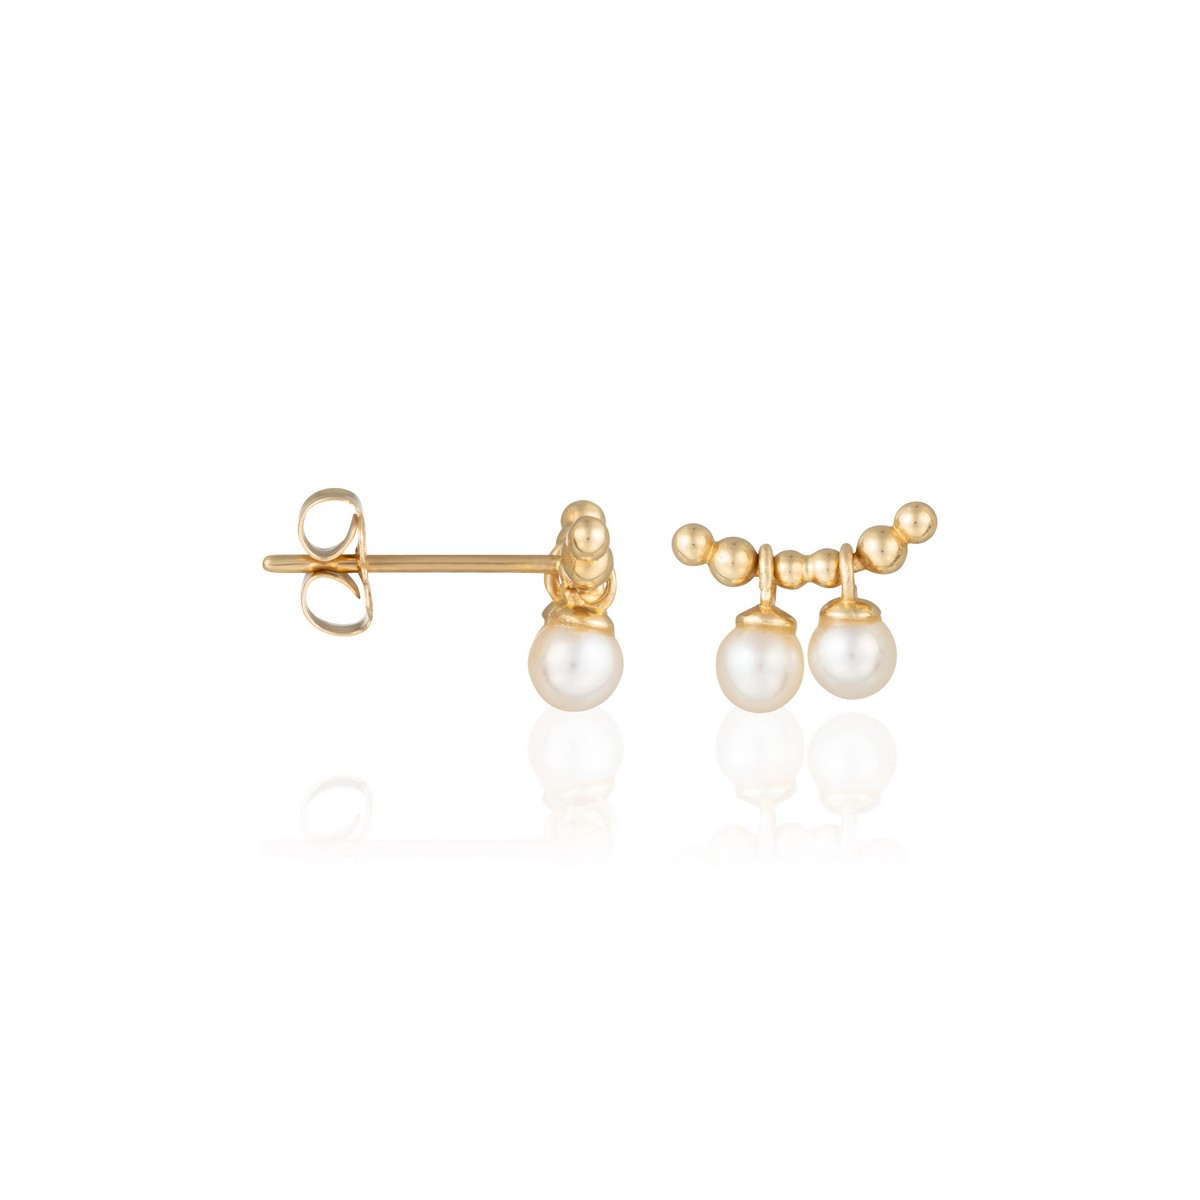 Boucles d'oreilles "Duo de perles" Or Jaune 375/1000 Perles Blanches